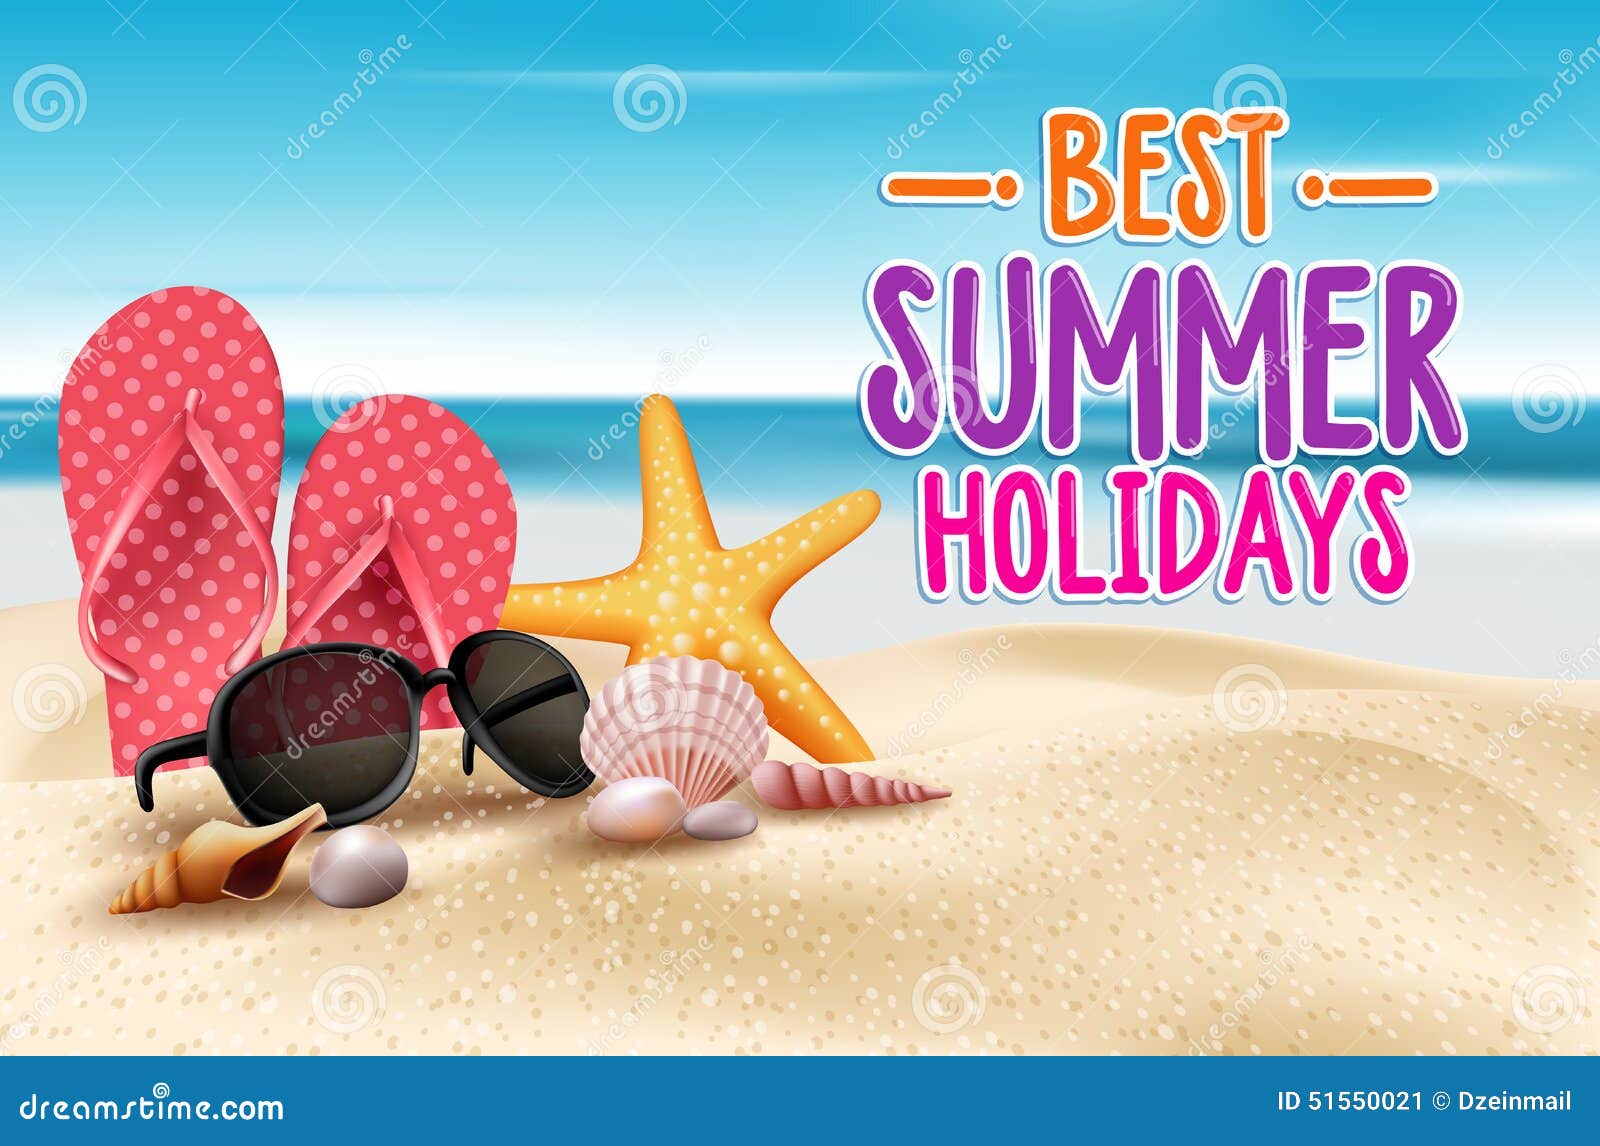 summer holidays in beach seashore